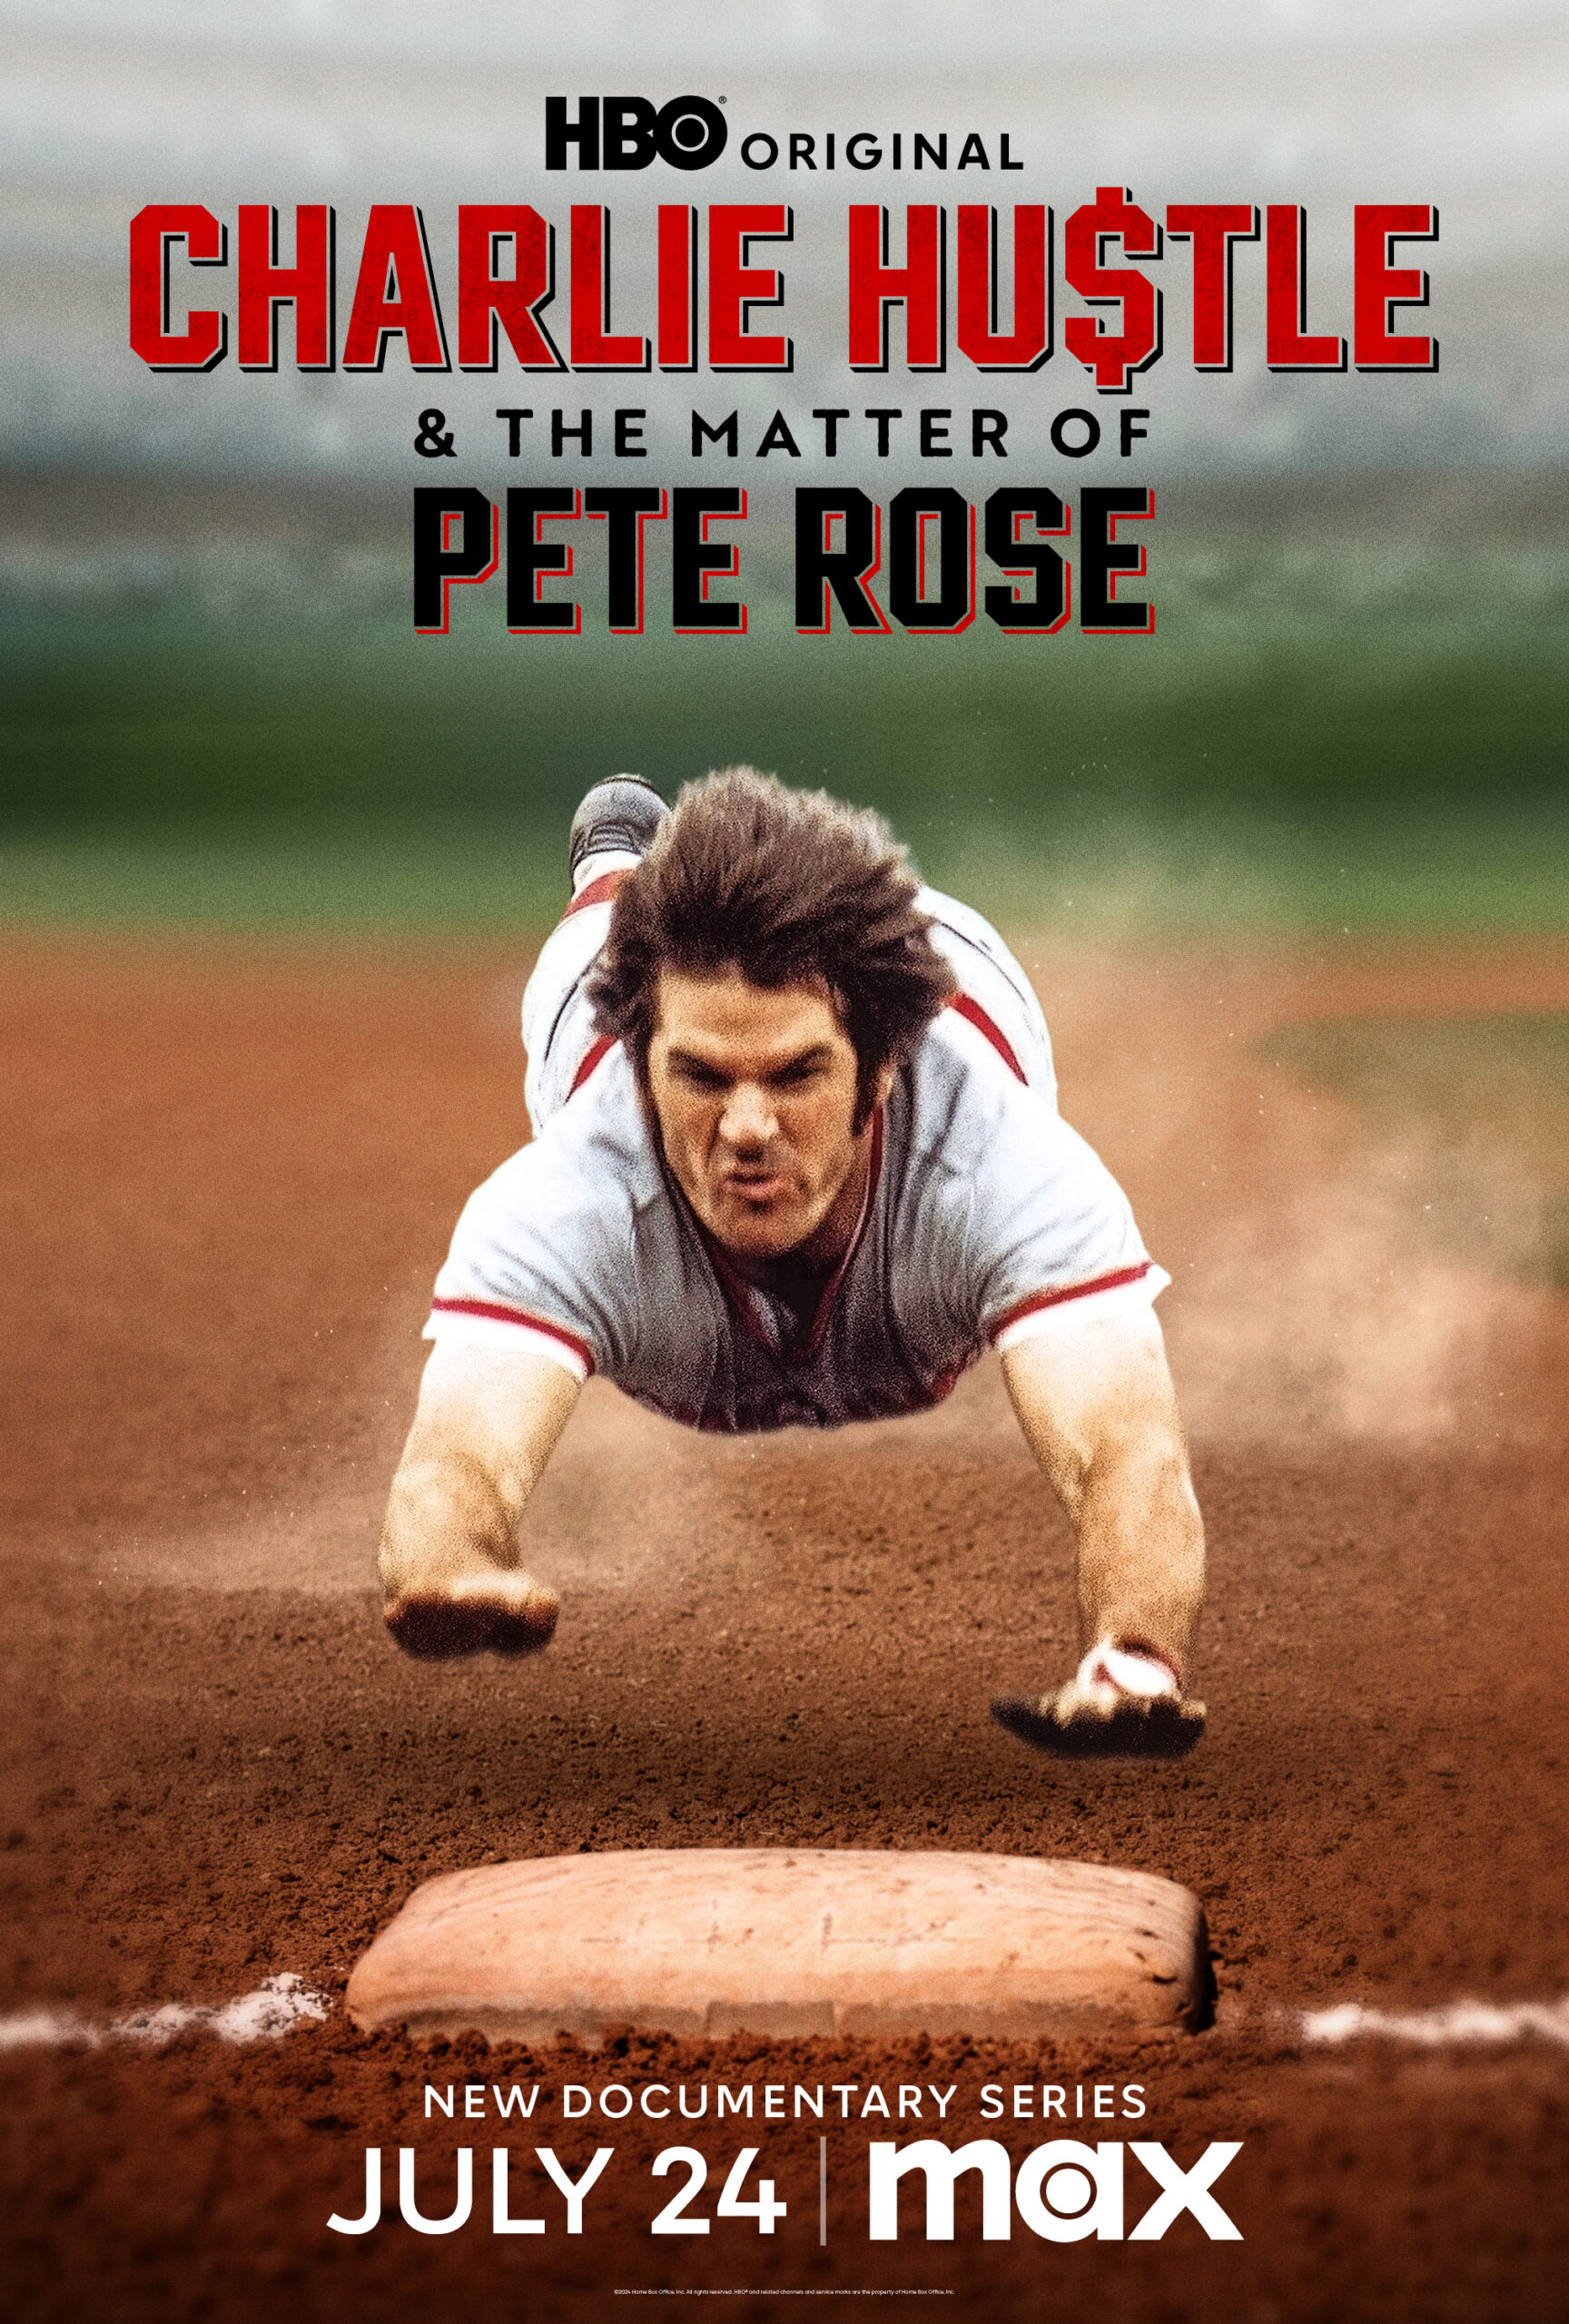 CHARLIE HUSTLE & THE MATTER OF PETE ROSE Debuts July 24